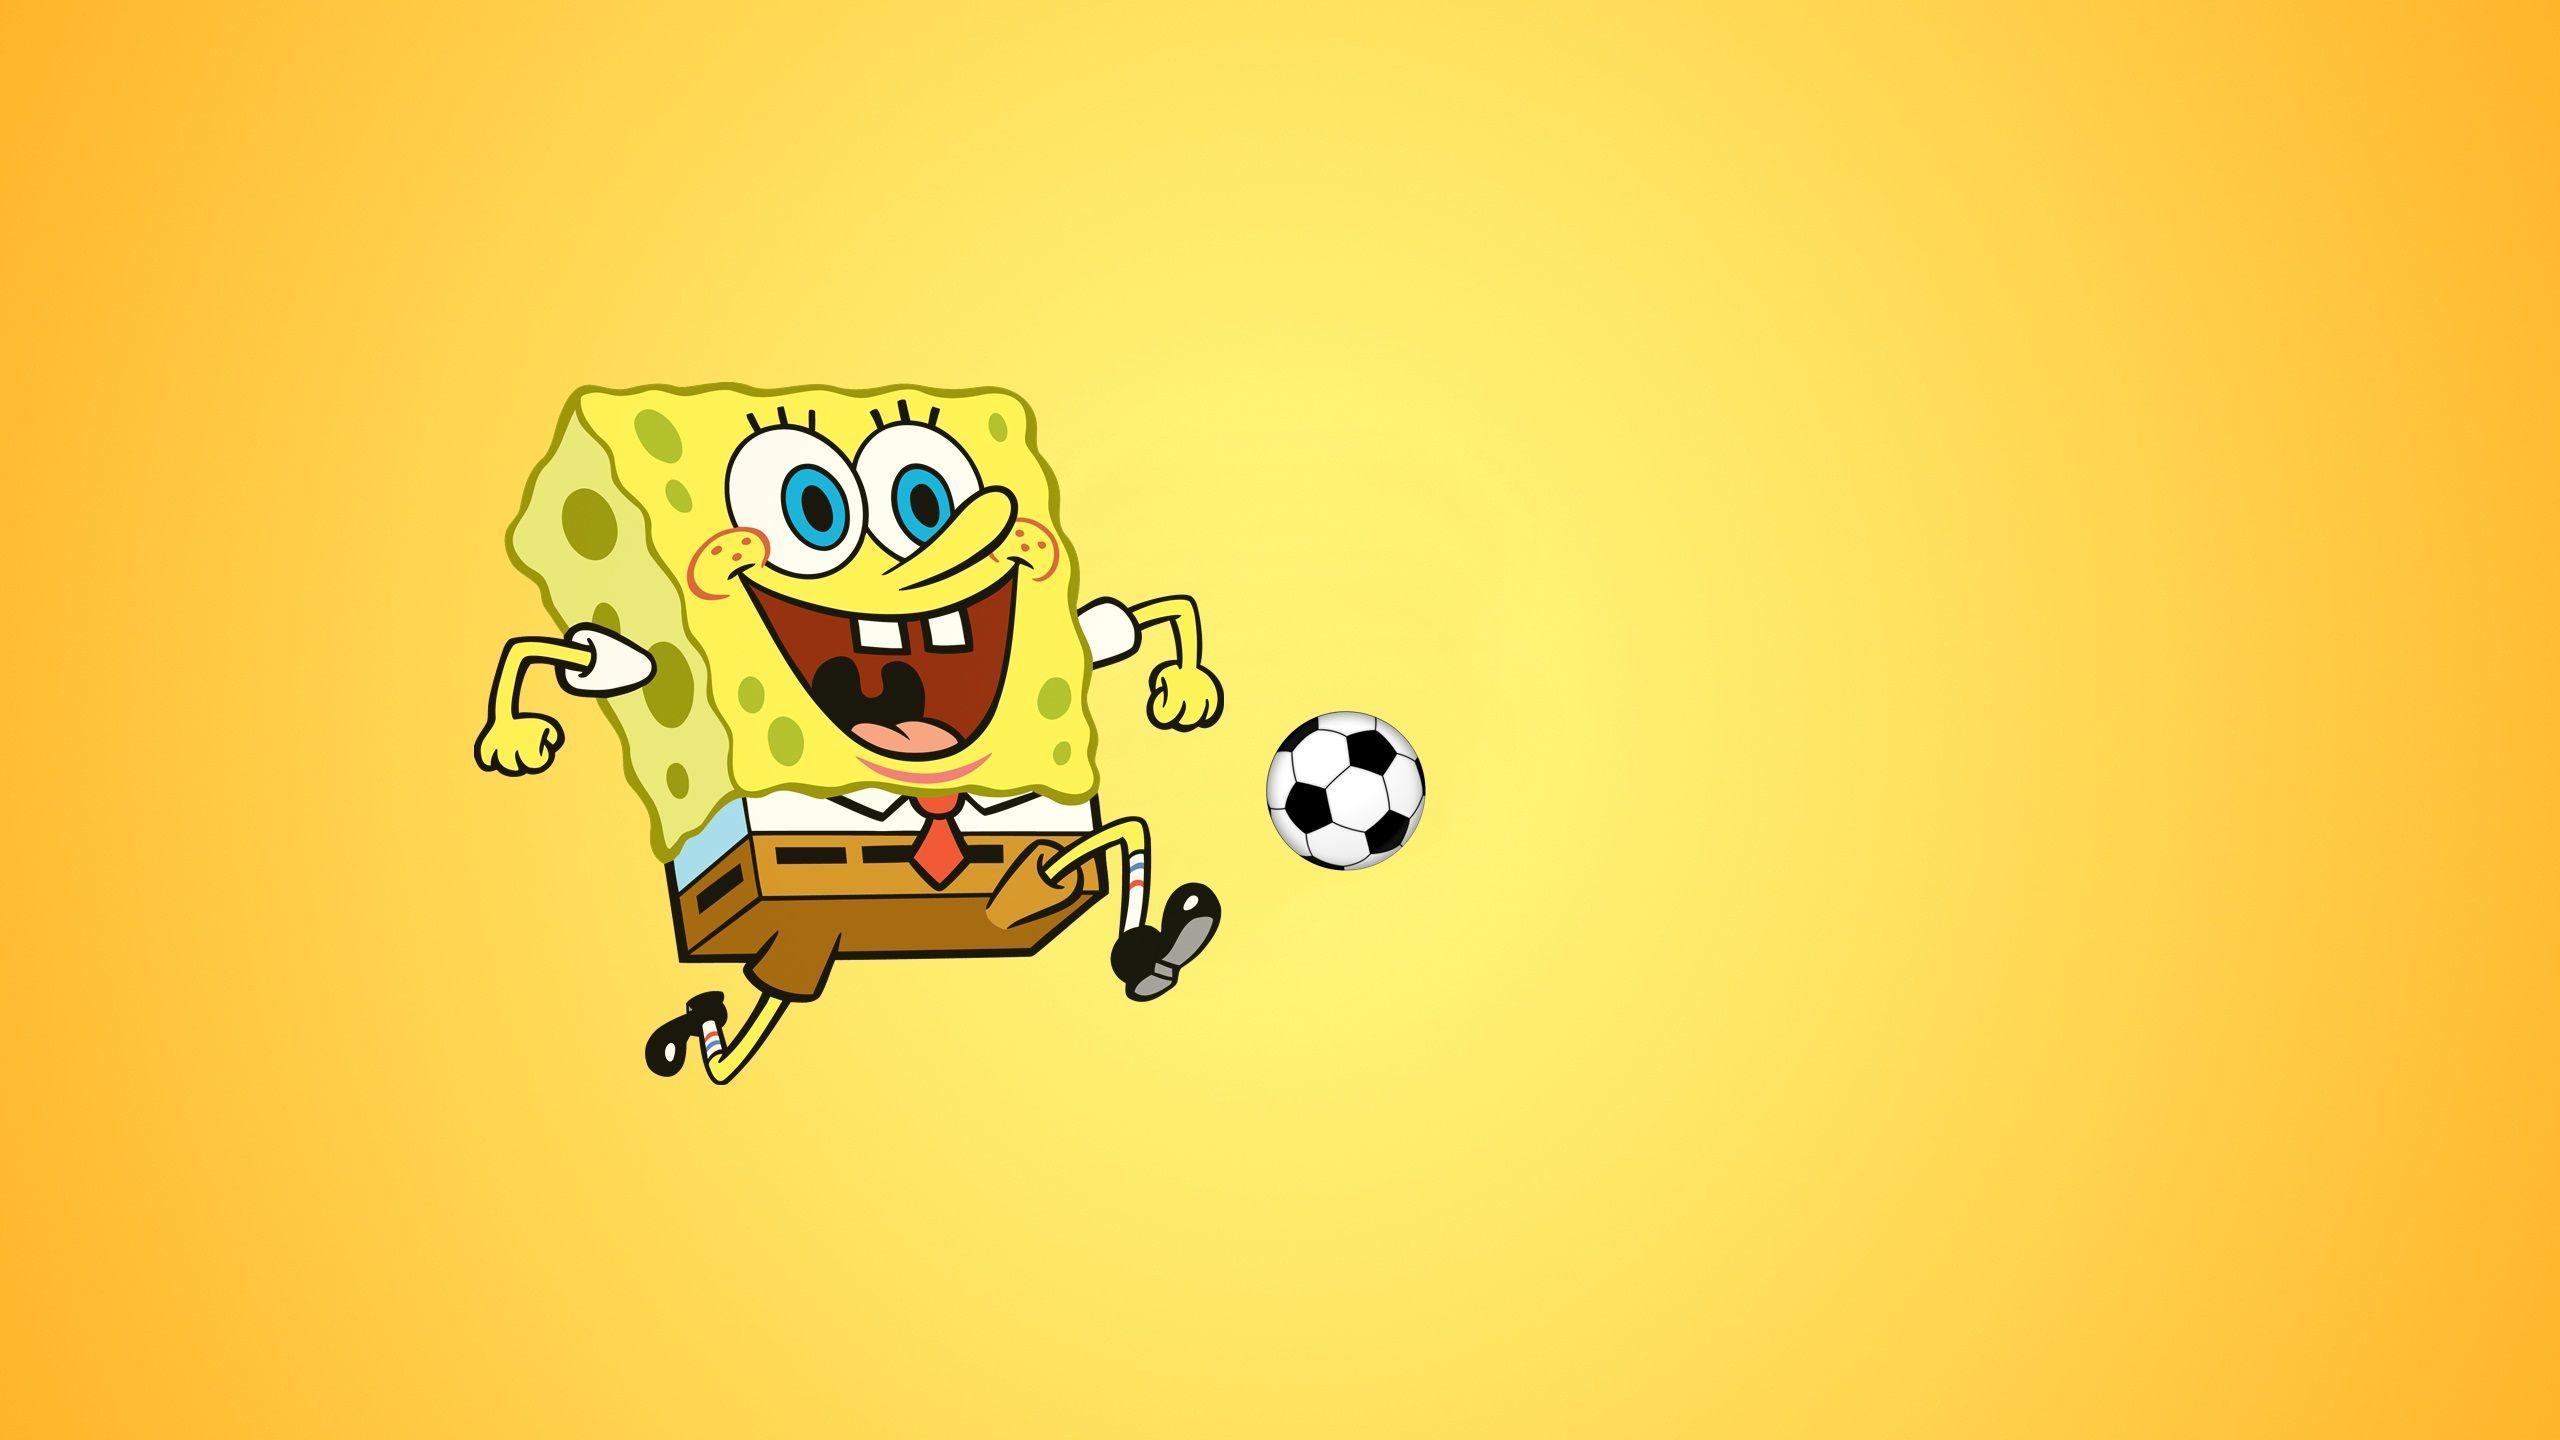 Spongebob Playing Football Wallpaper 27590